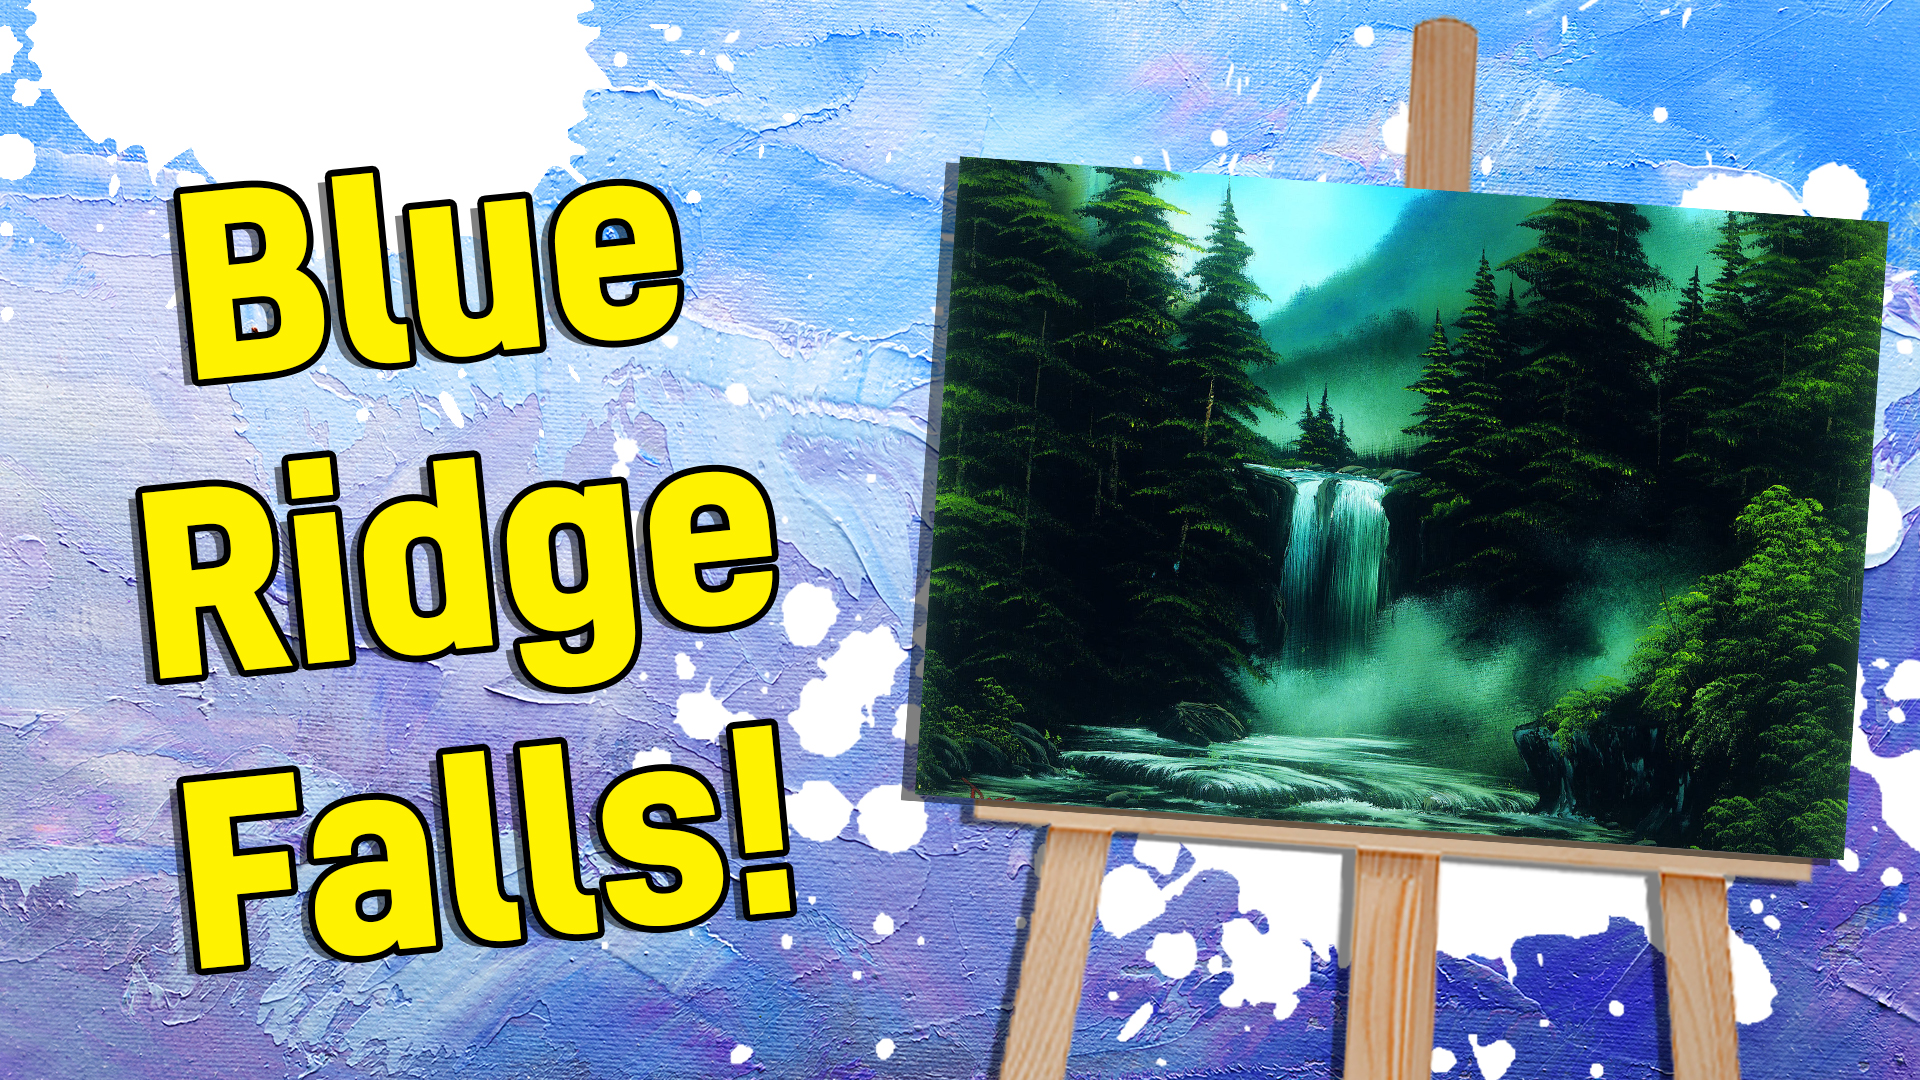 Result: Ridge Falls